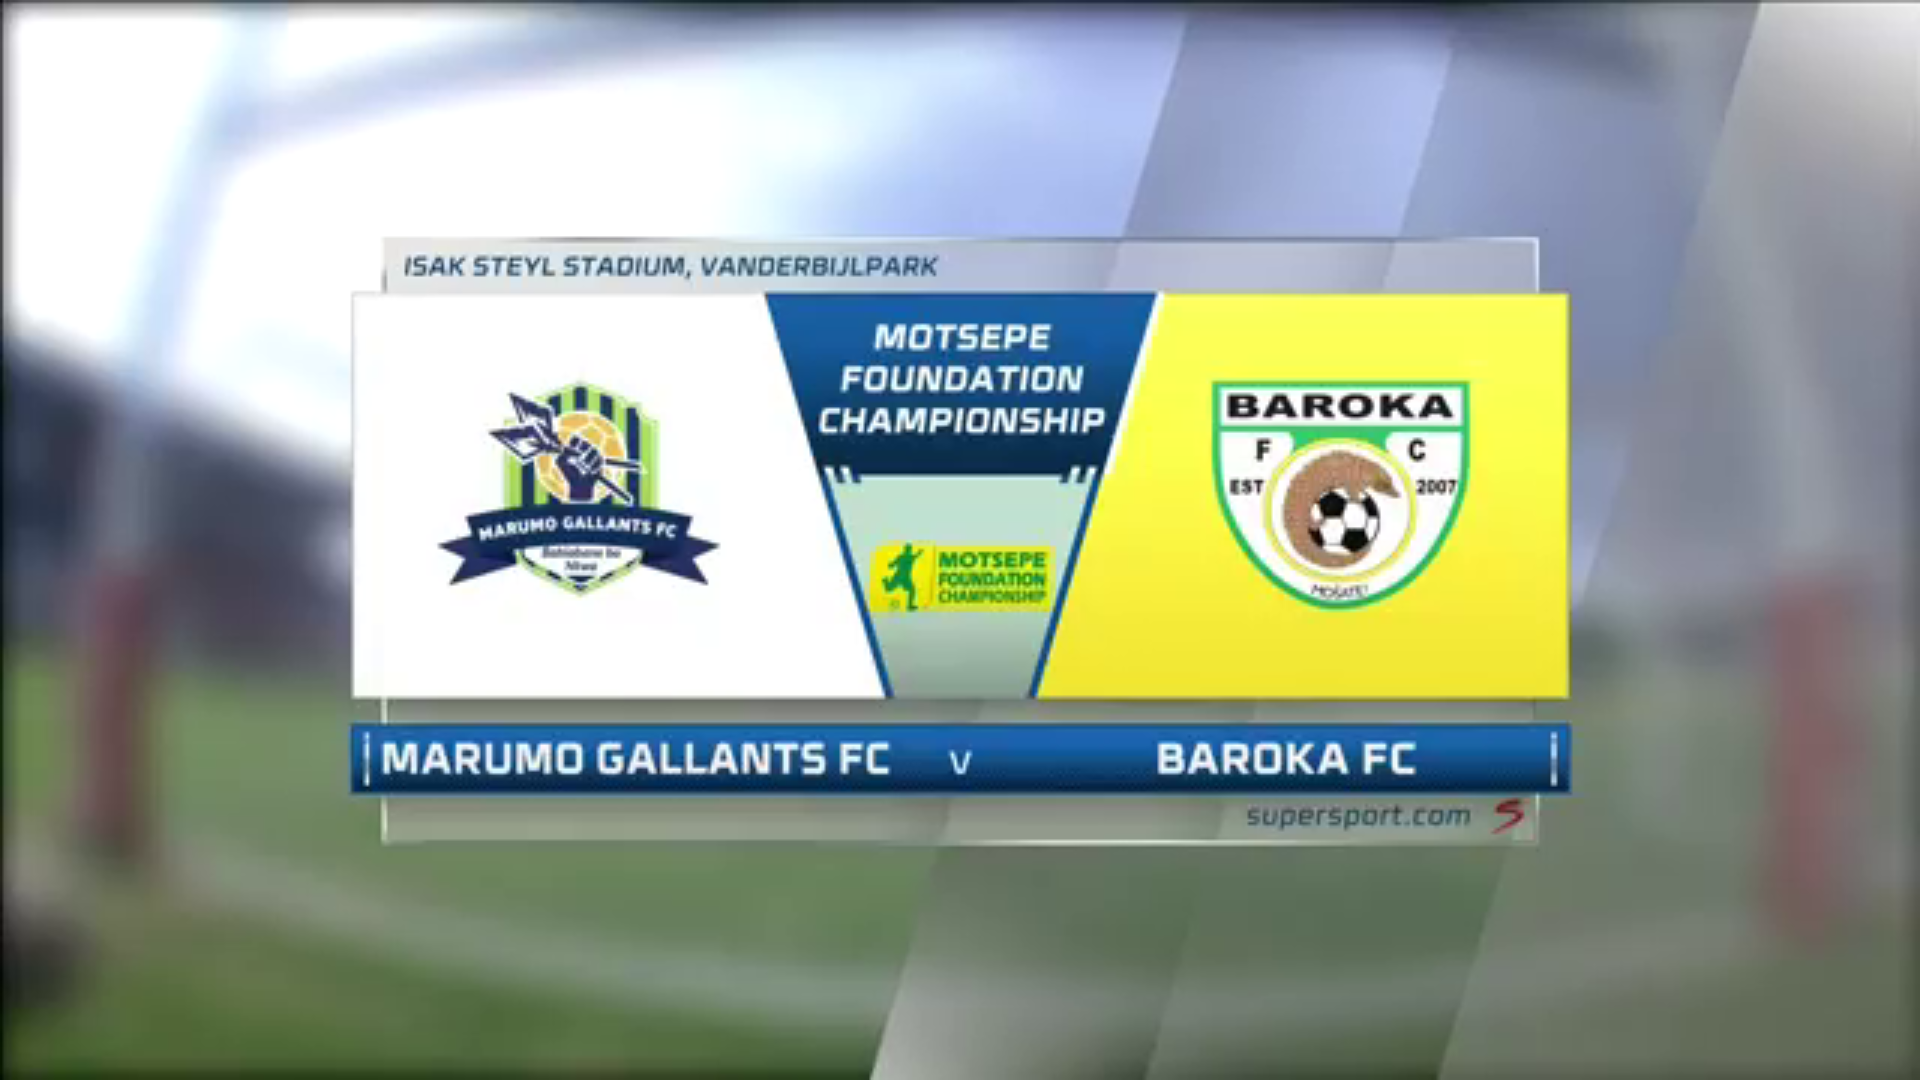 Marumo Gallants v Baroka FC | Match Highlights | Motsepe Foundation Championship